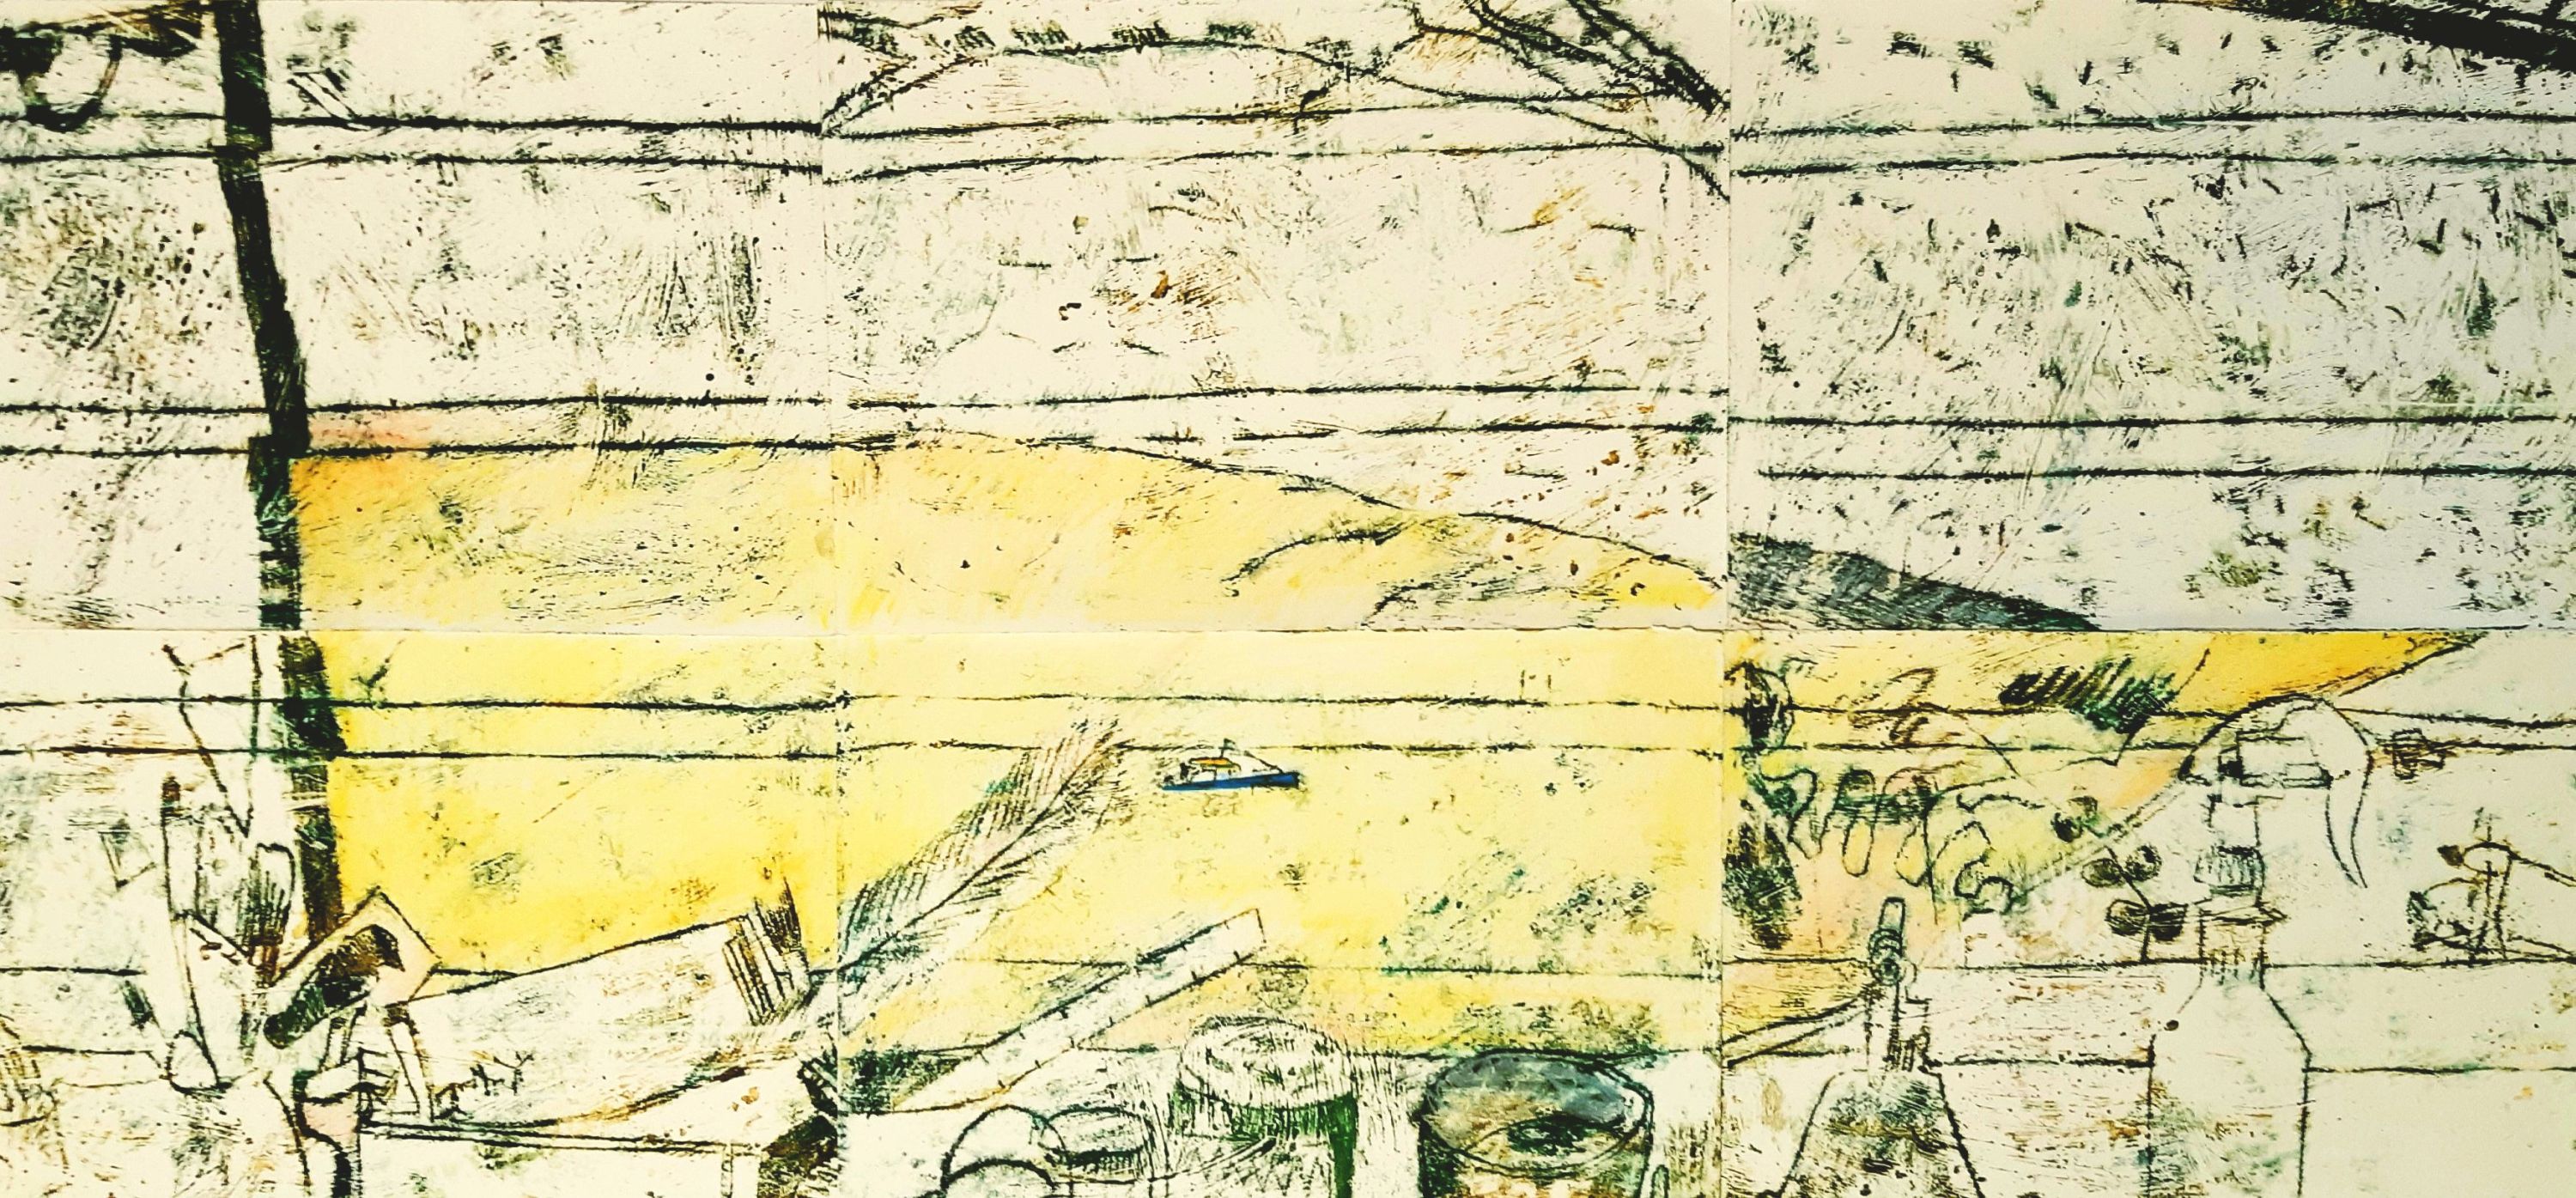 Brisbane River - Yellow by Donna Malone | Lethbridge Landscape Prize 2021 Finalists | Lethbridge Gallery